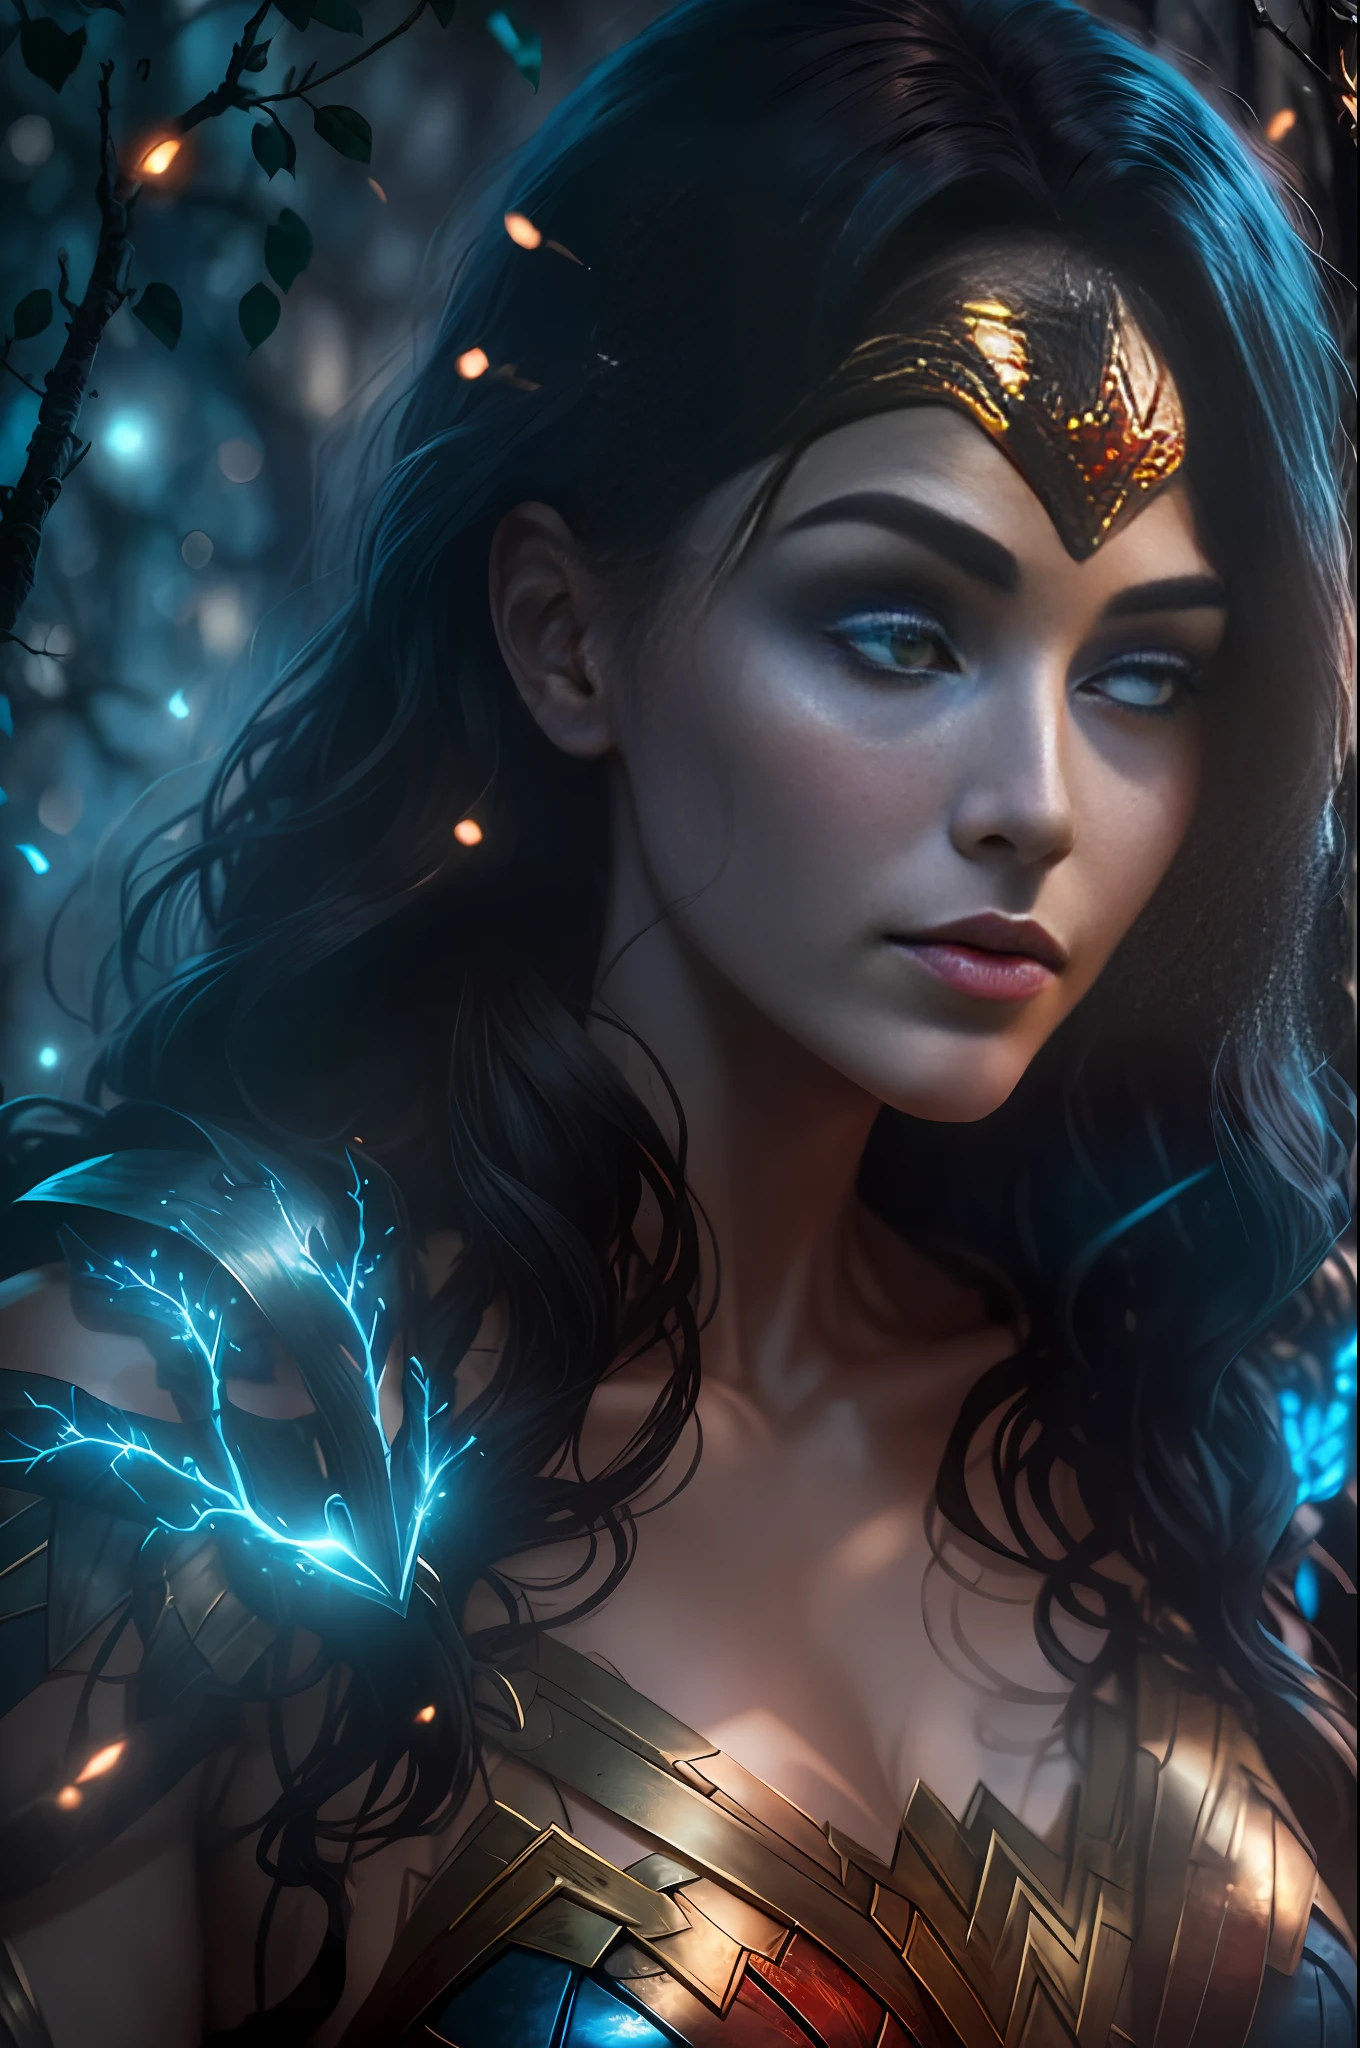 Evil Wonder Woman จาก DC ปกคลุมไปด้วยกิ่งไม้, หัวใจเรืองแสงสีขาวสีฟ้าสดใสที่มองเห็นได้จากมนุษย์, ตอนกลางคืน, มีสีสัน, การถ่ายภาพแสง HDR แบบภาพยนตร์ที่มีรายละเอียดมาก, แสงซอฟต์บ็อกซ์, รายละเอียดสุดขีด